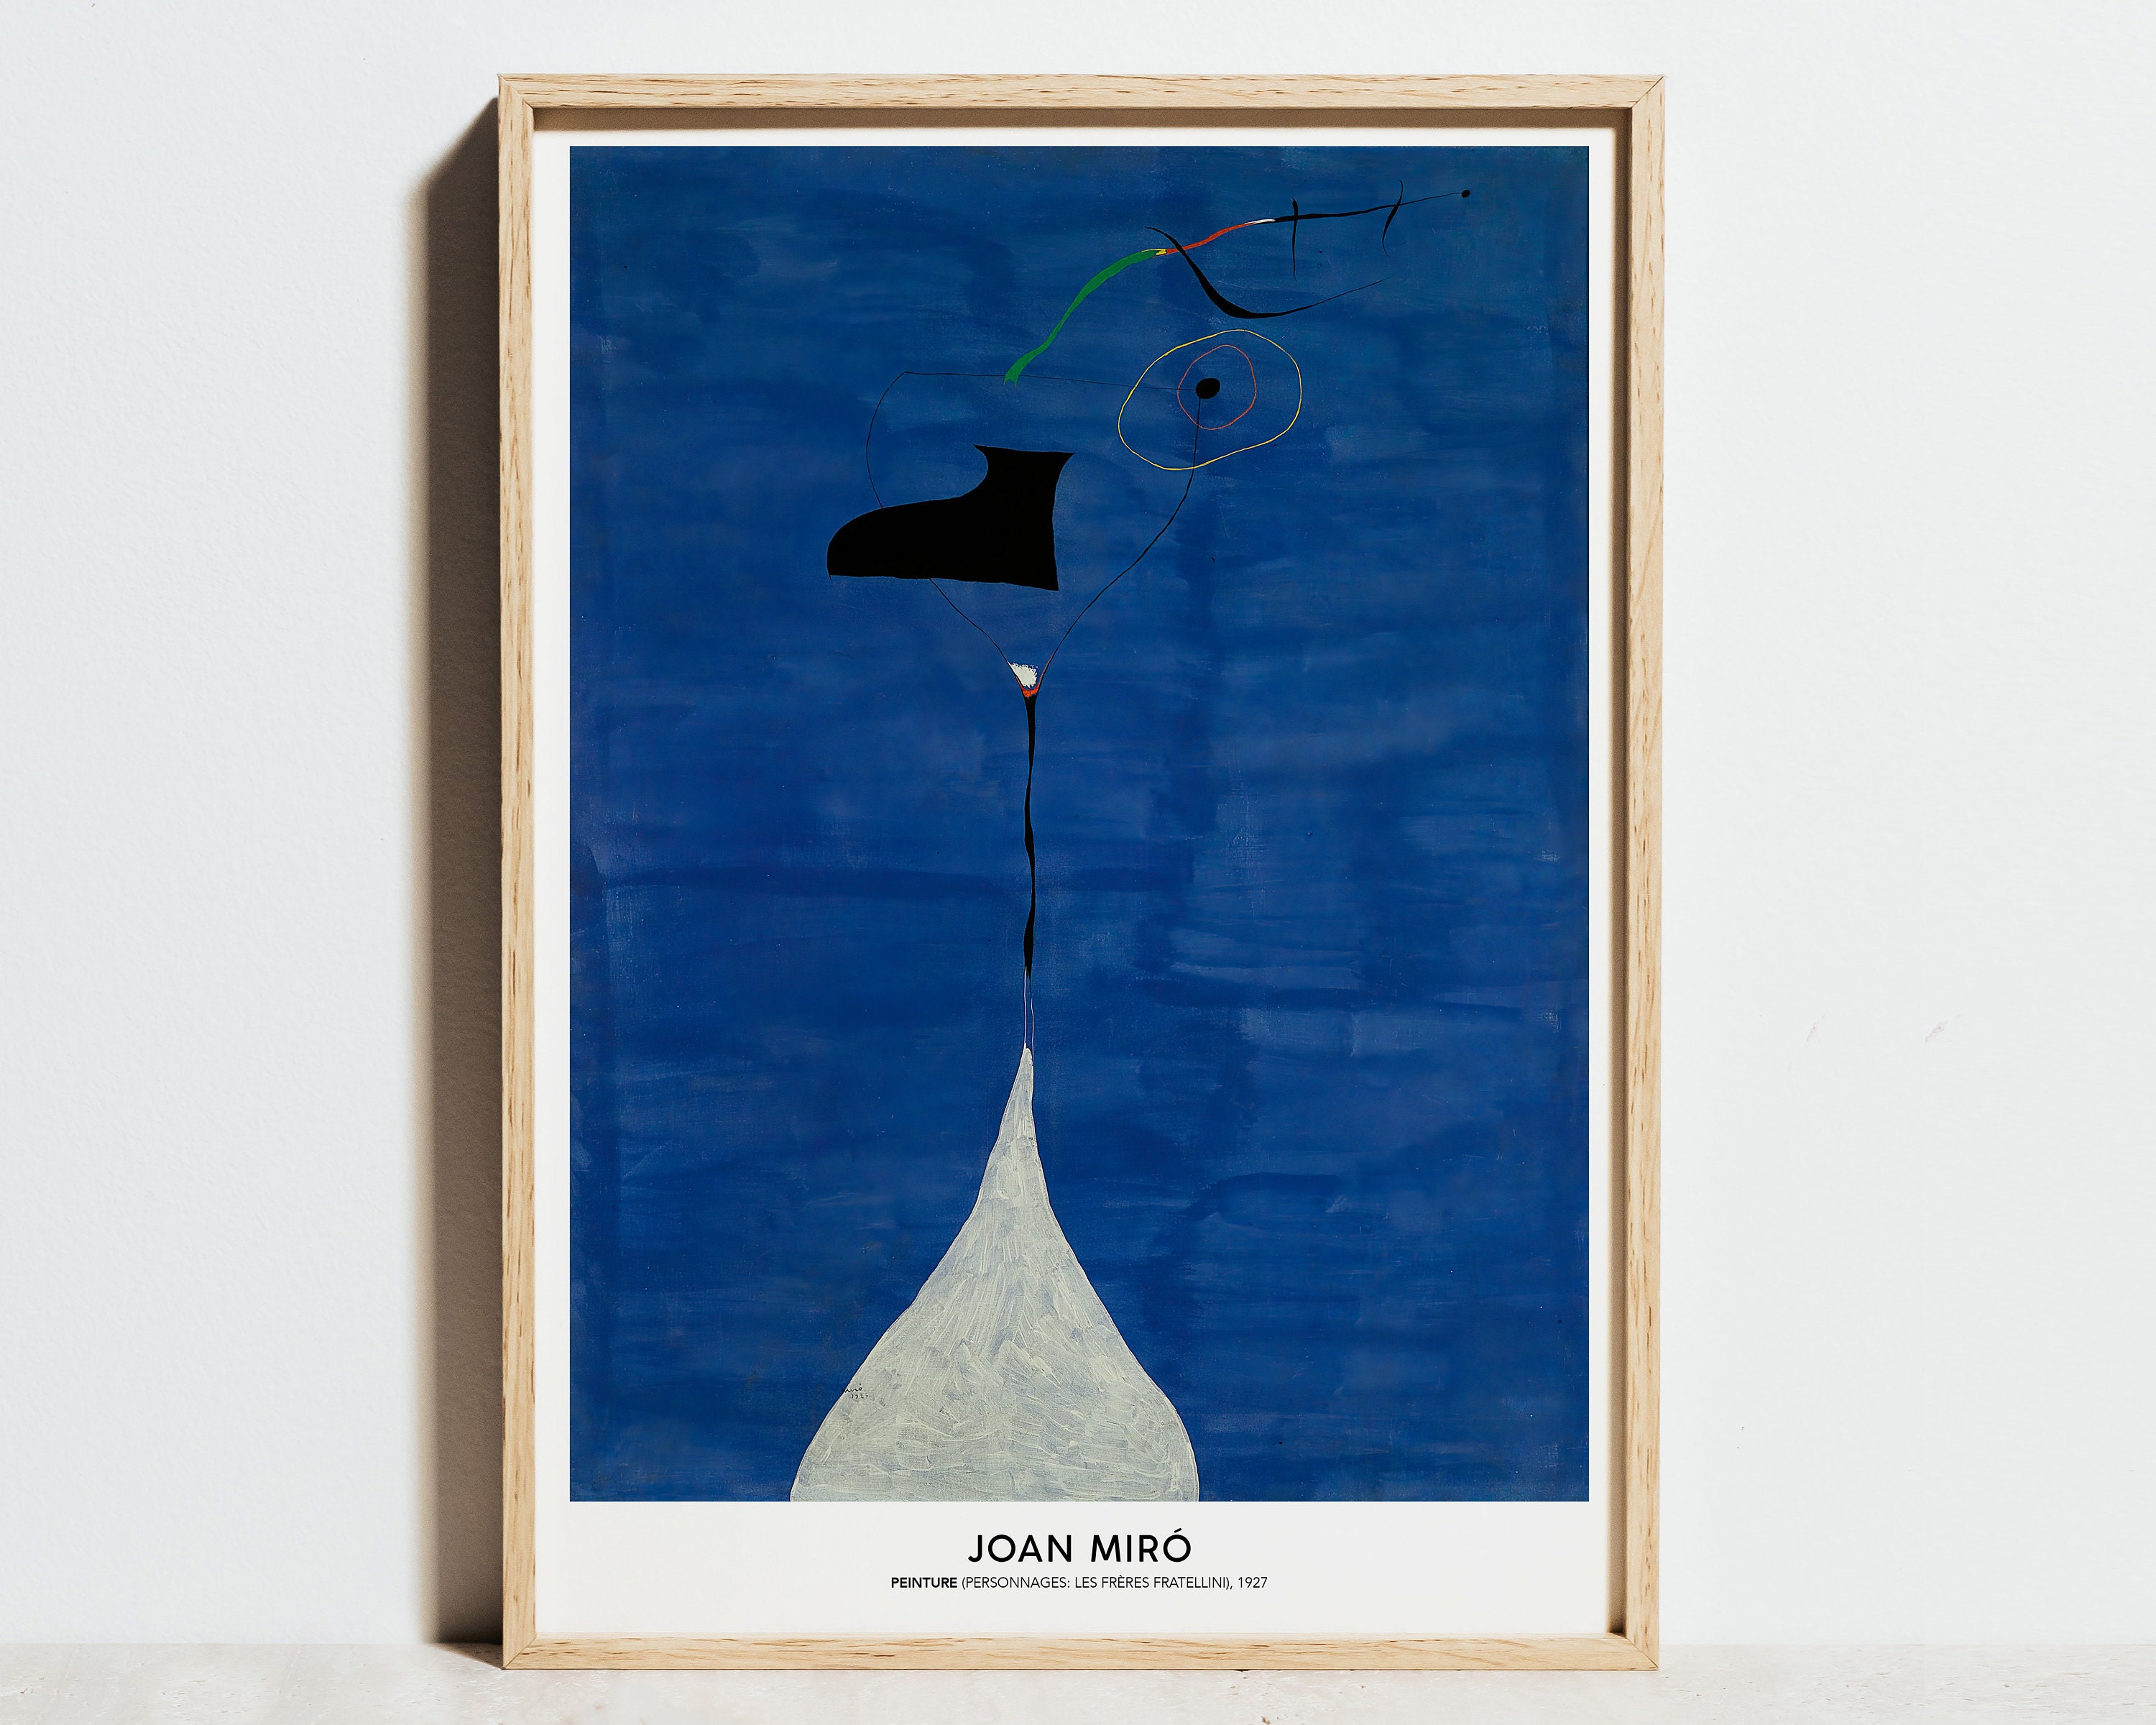 Joan Miro Portrait Art Game